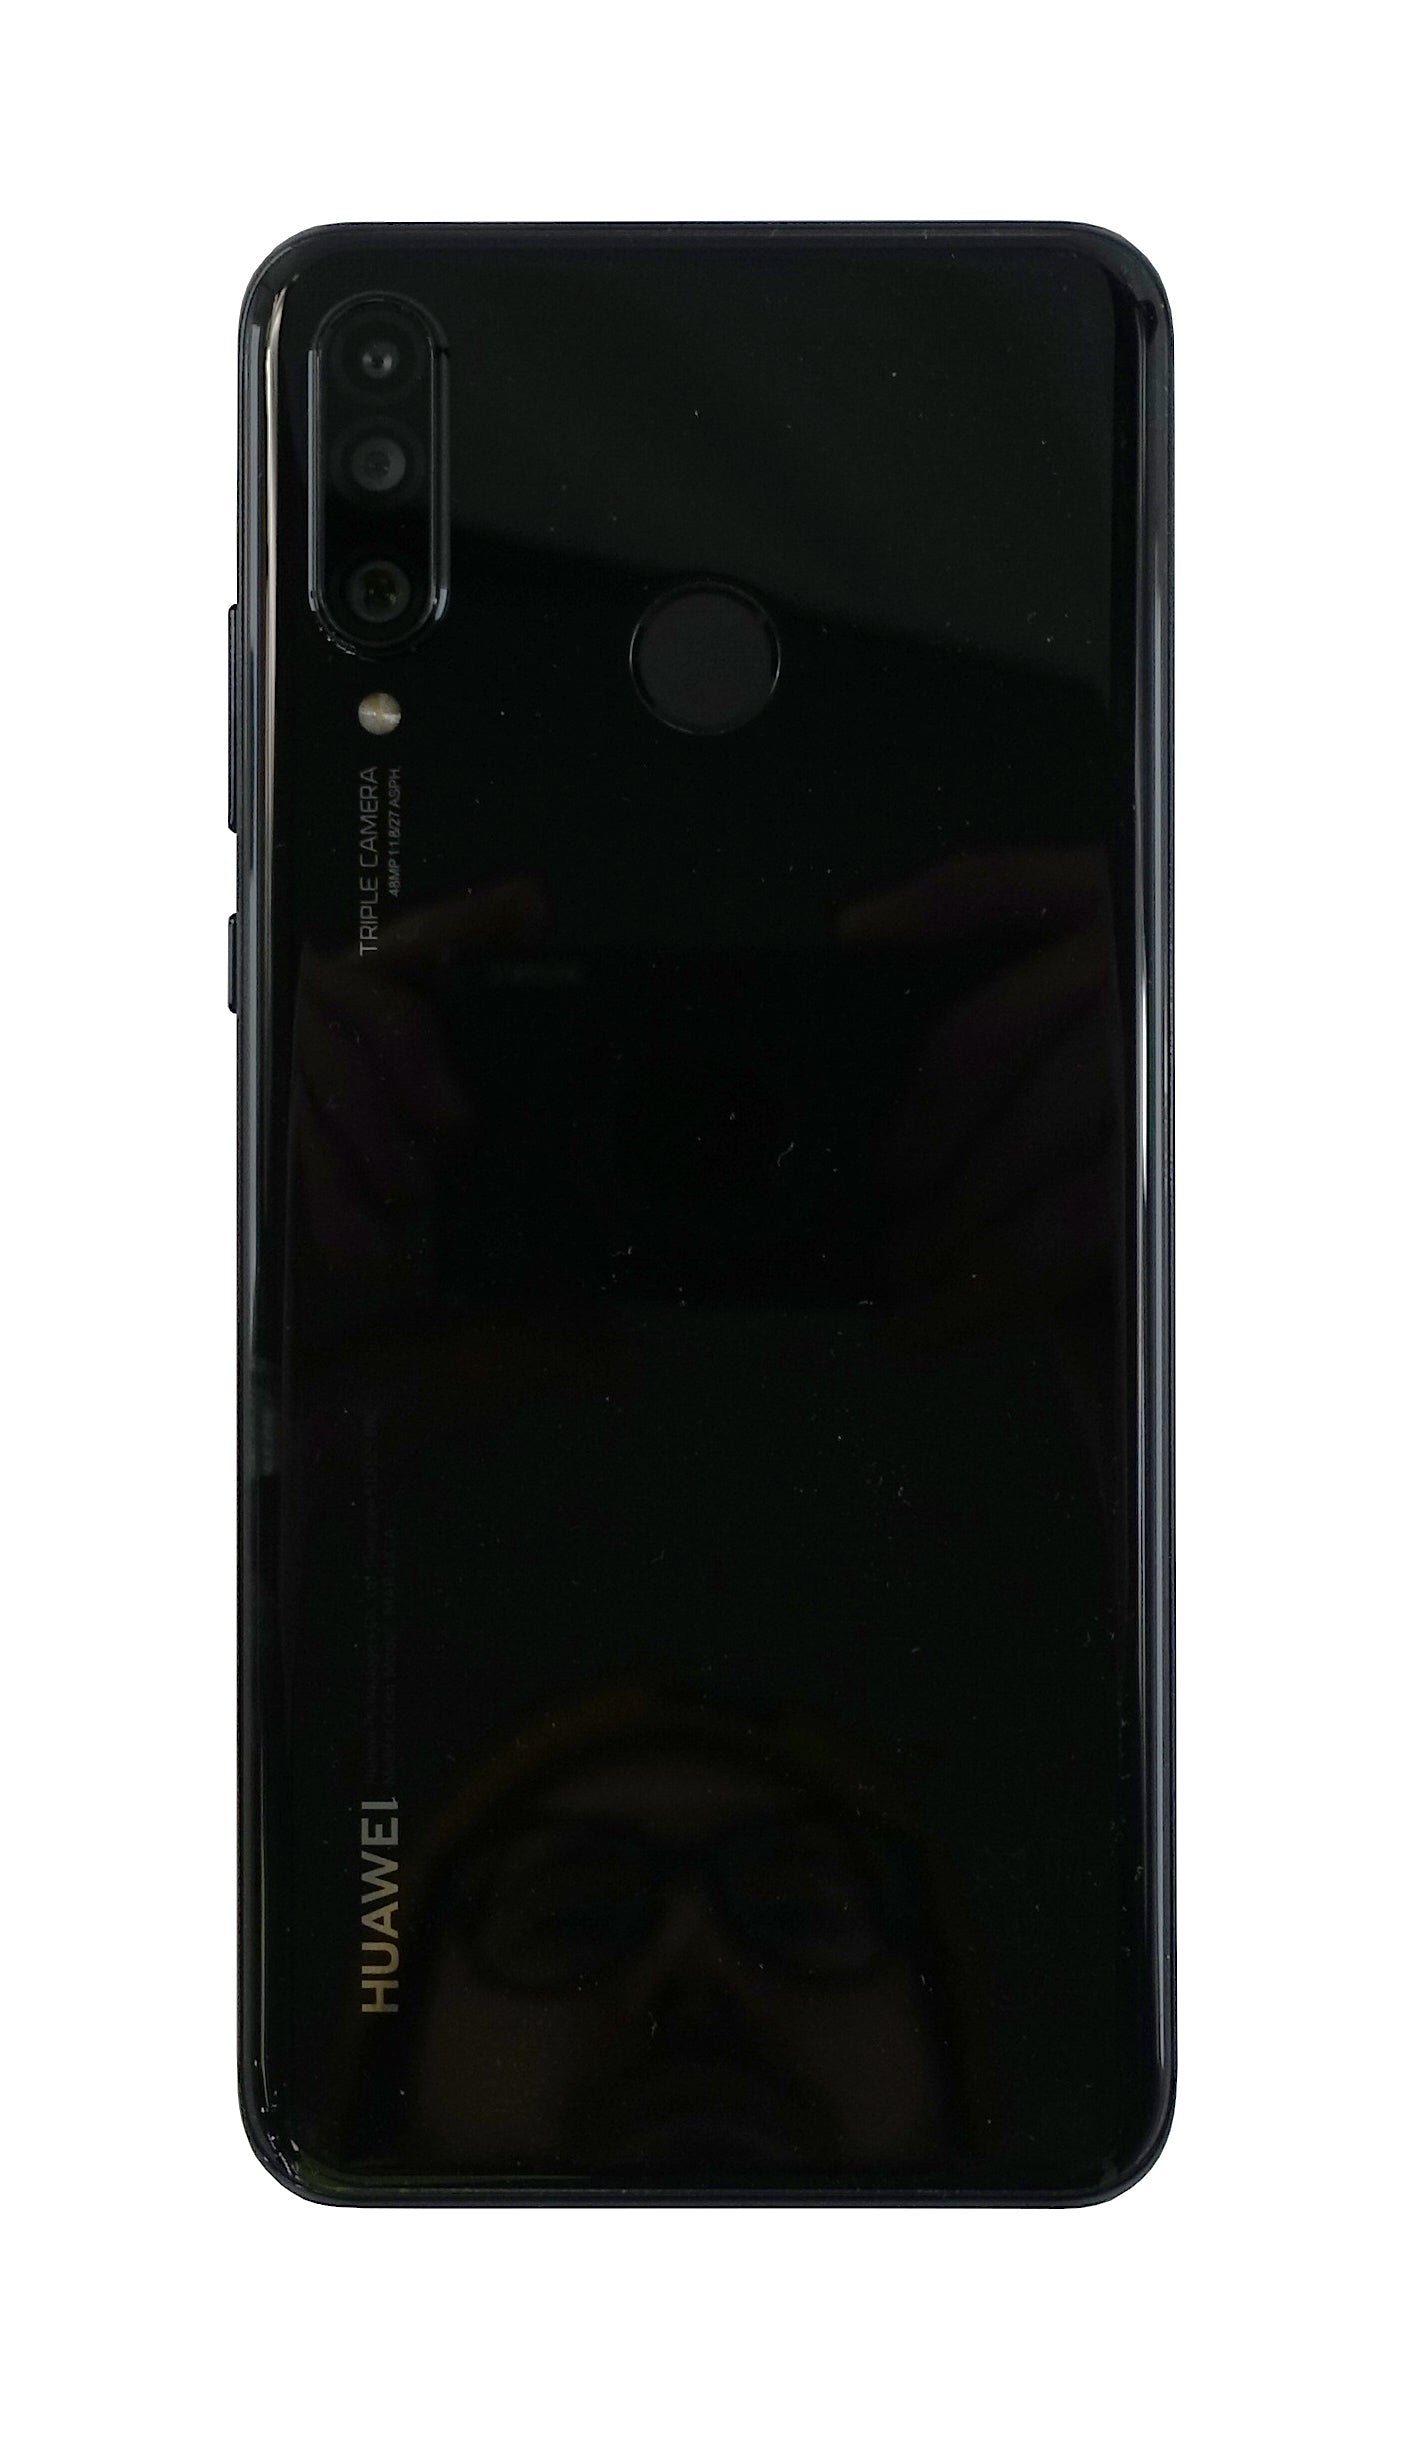 HUAWEI P30 Lite Smartphone, 128GB, Network Unlocked, Black, MAR-LX1A